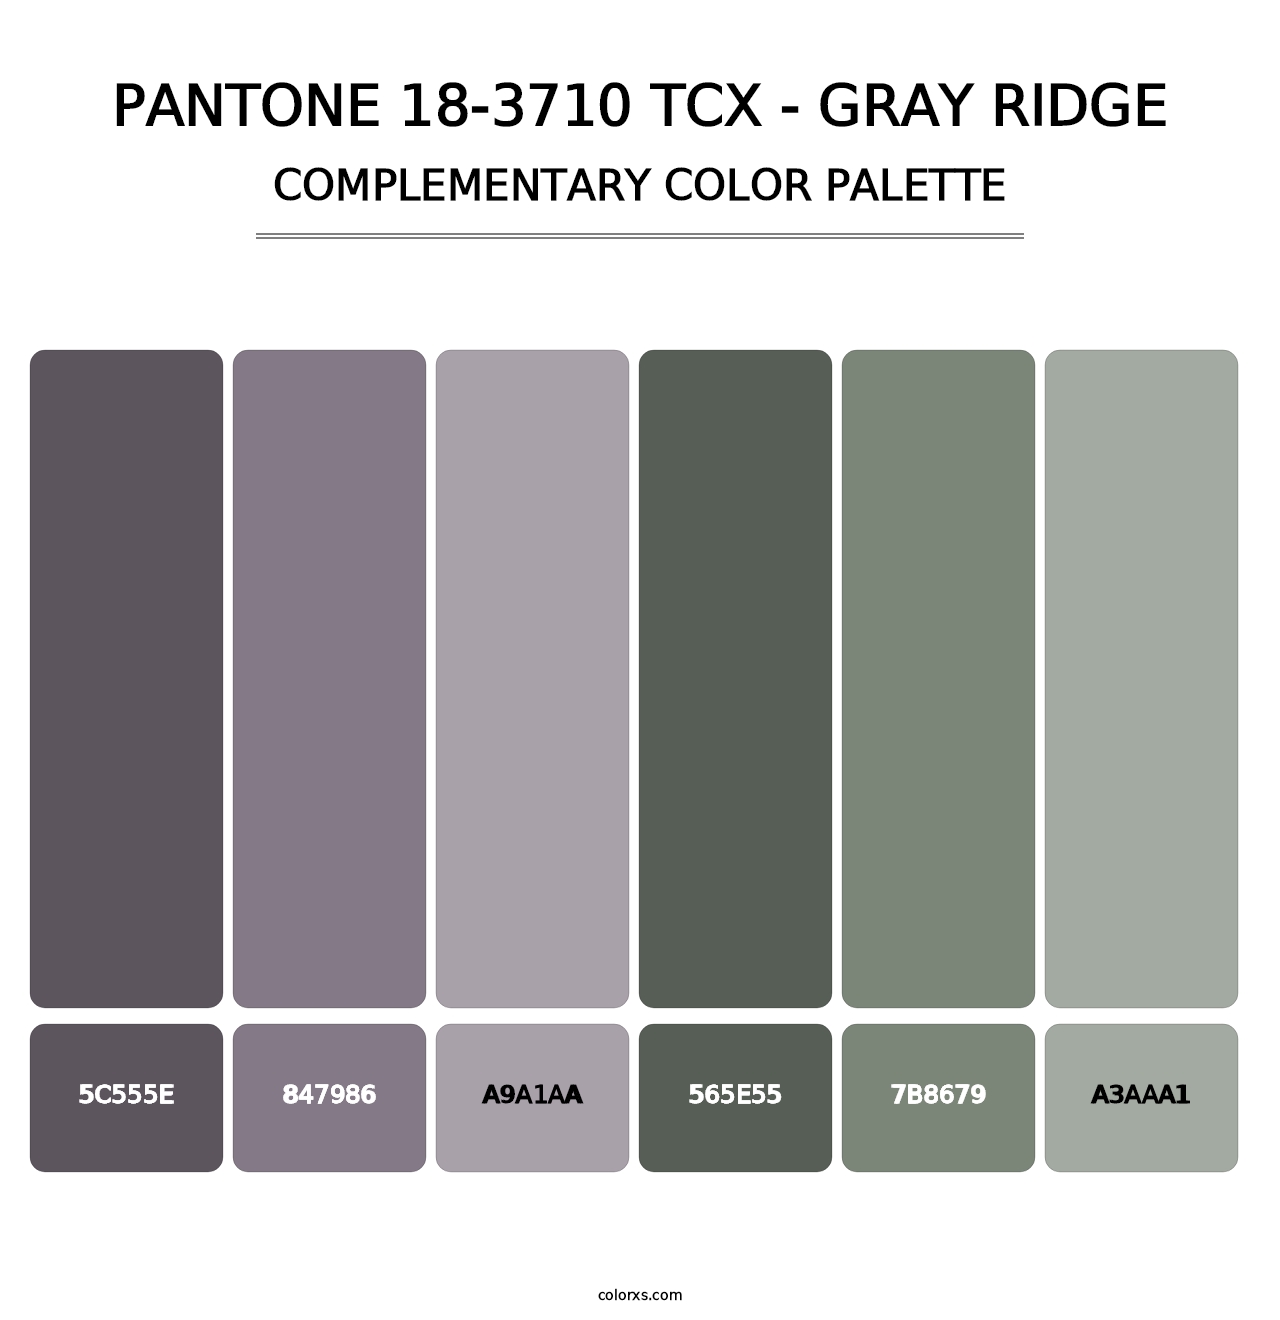 PANTONE 18-3710 TCX - Gray Ridge - Complementary Color Palette